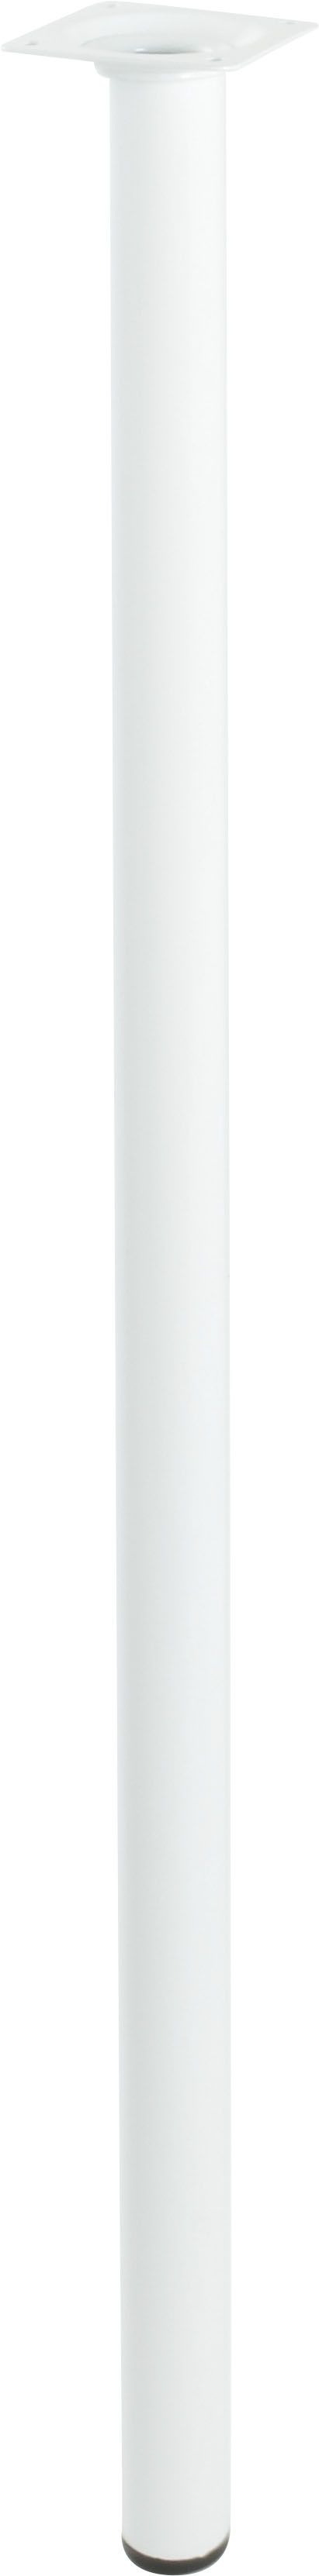 Pied cylindrique métal blanc H.700 Ø30 mm - EVOLUDIS